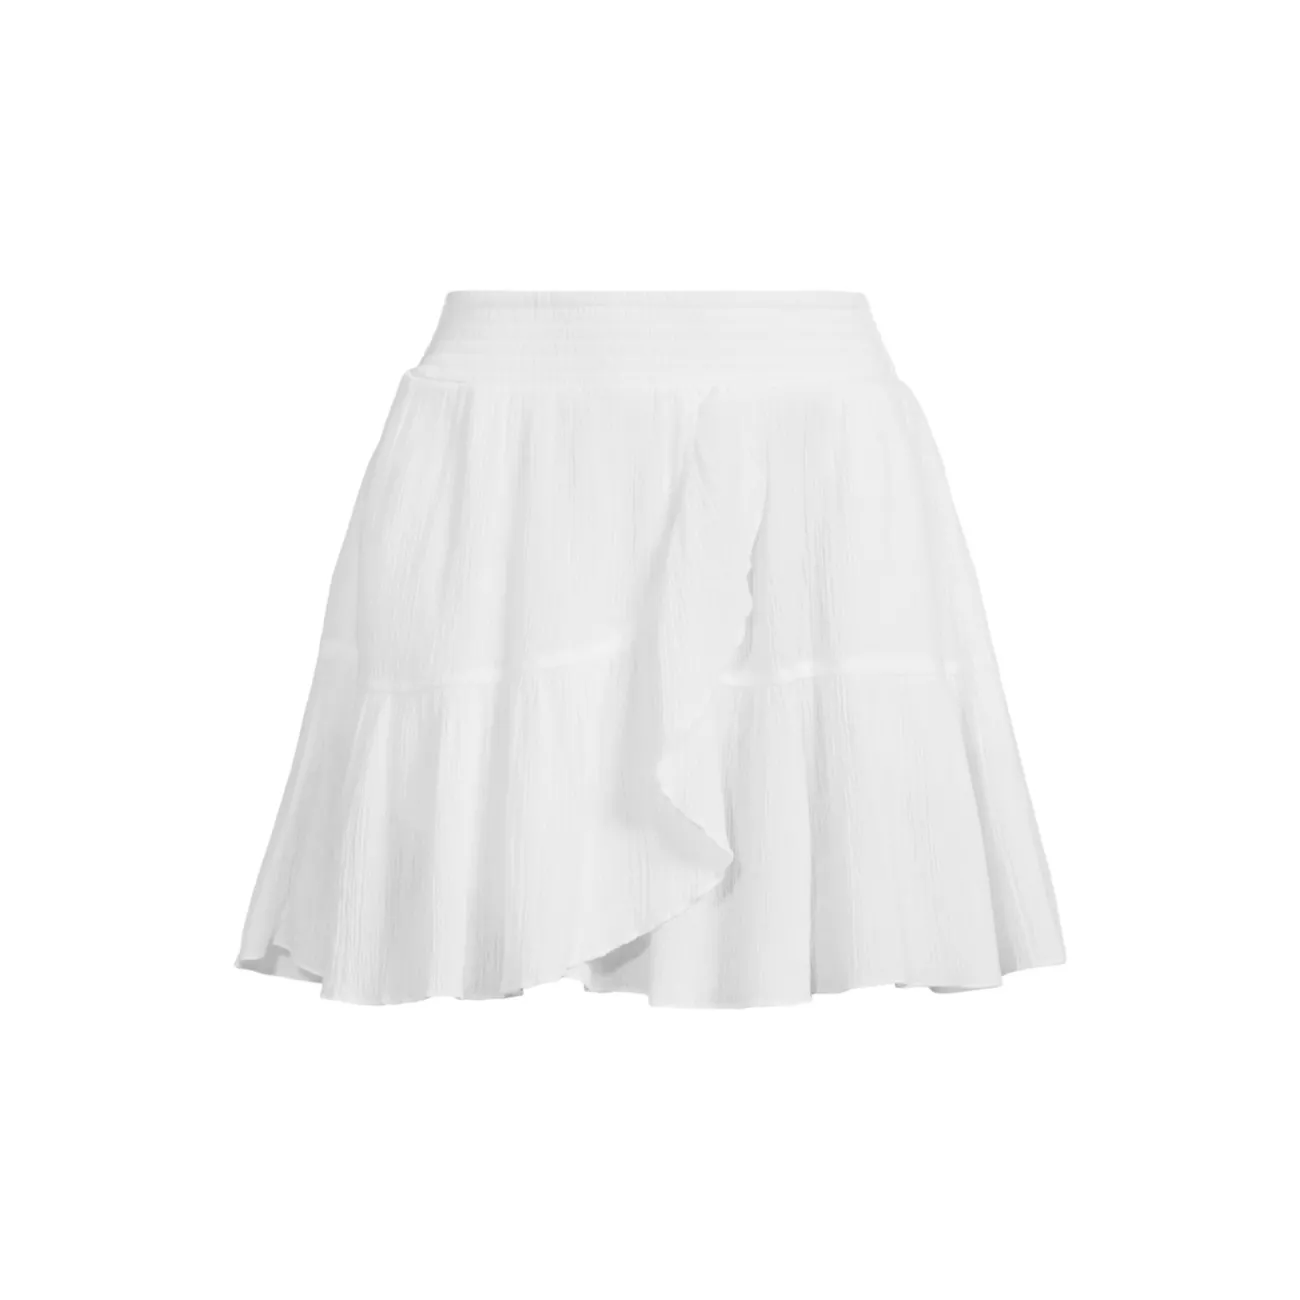 Izzy Cotton Wrap Skirt Change of Scenery